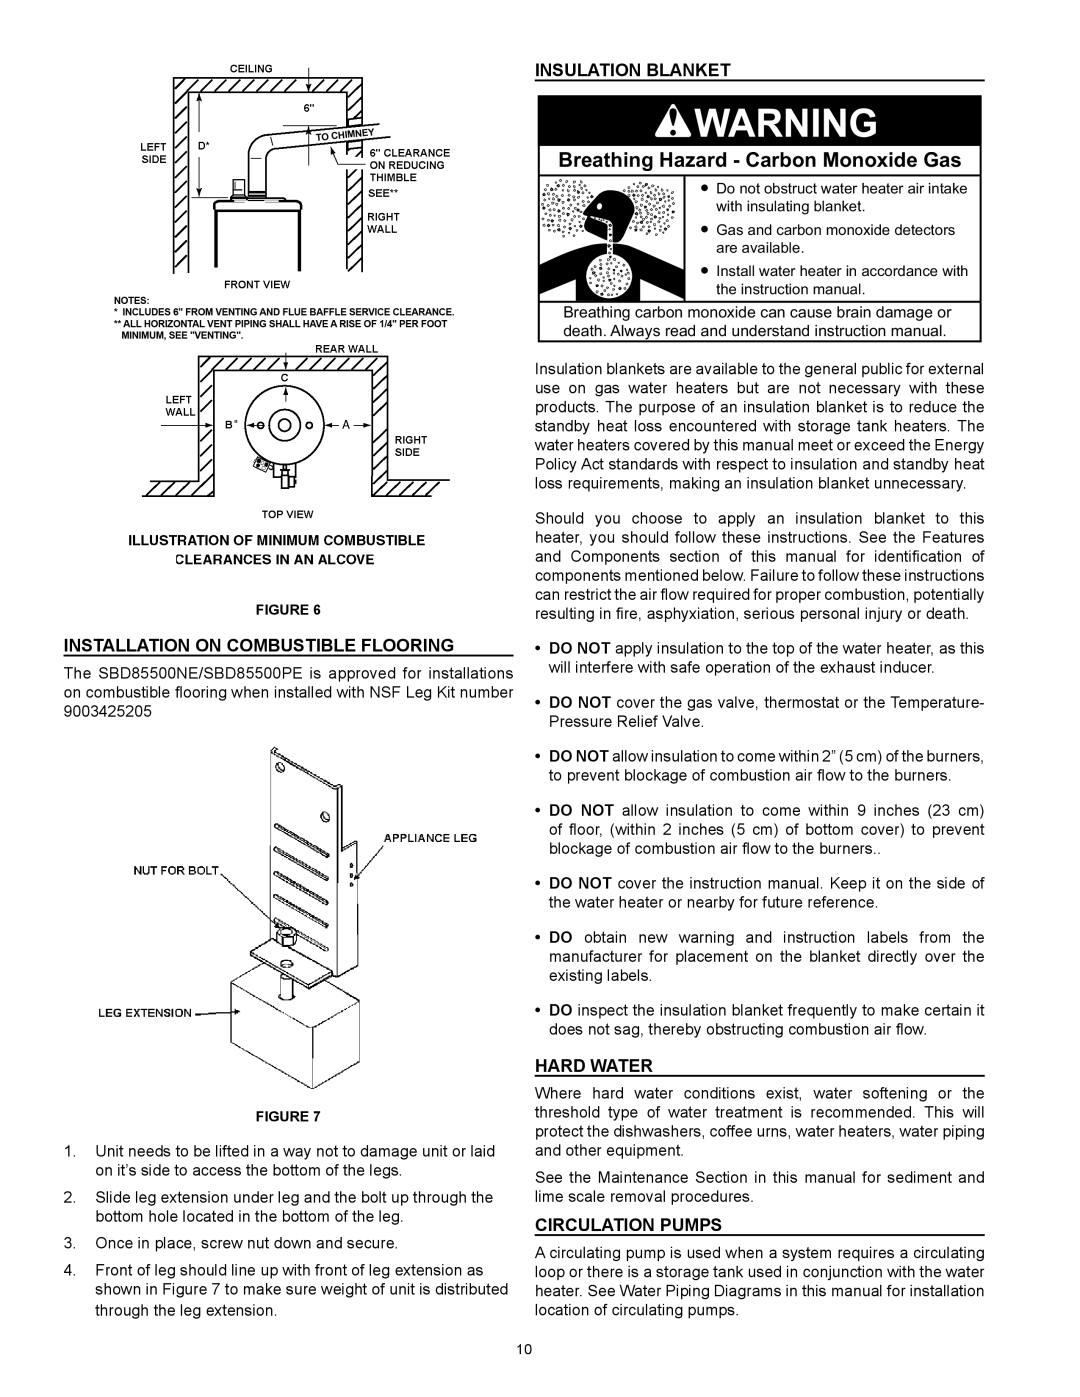 State Industries SBD85500NE Breathing Hazard - Carbon Monoxide Gas, Installation On Combustible Flooring, Hard Water 